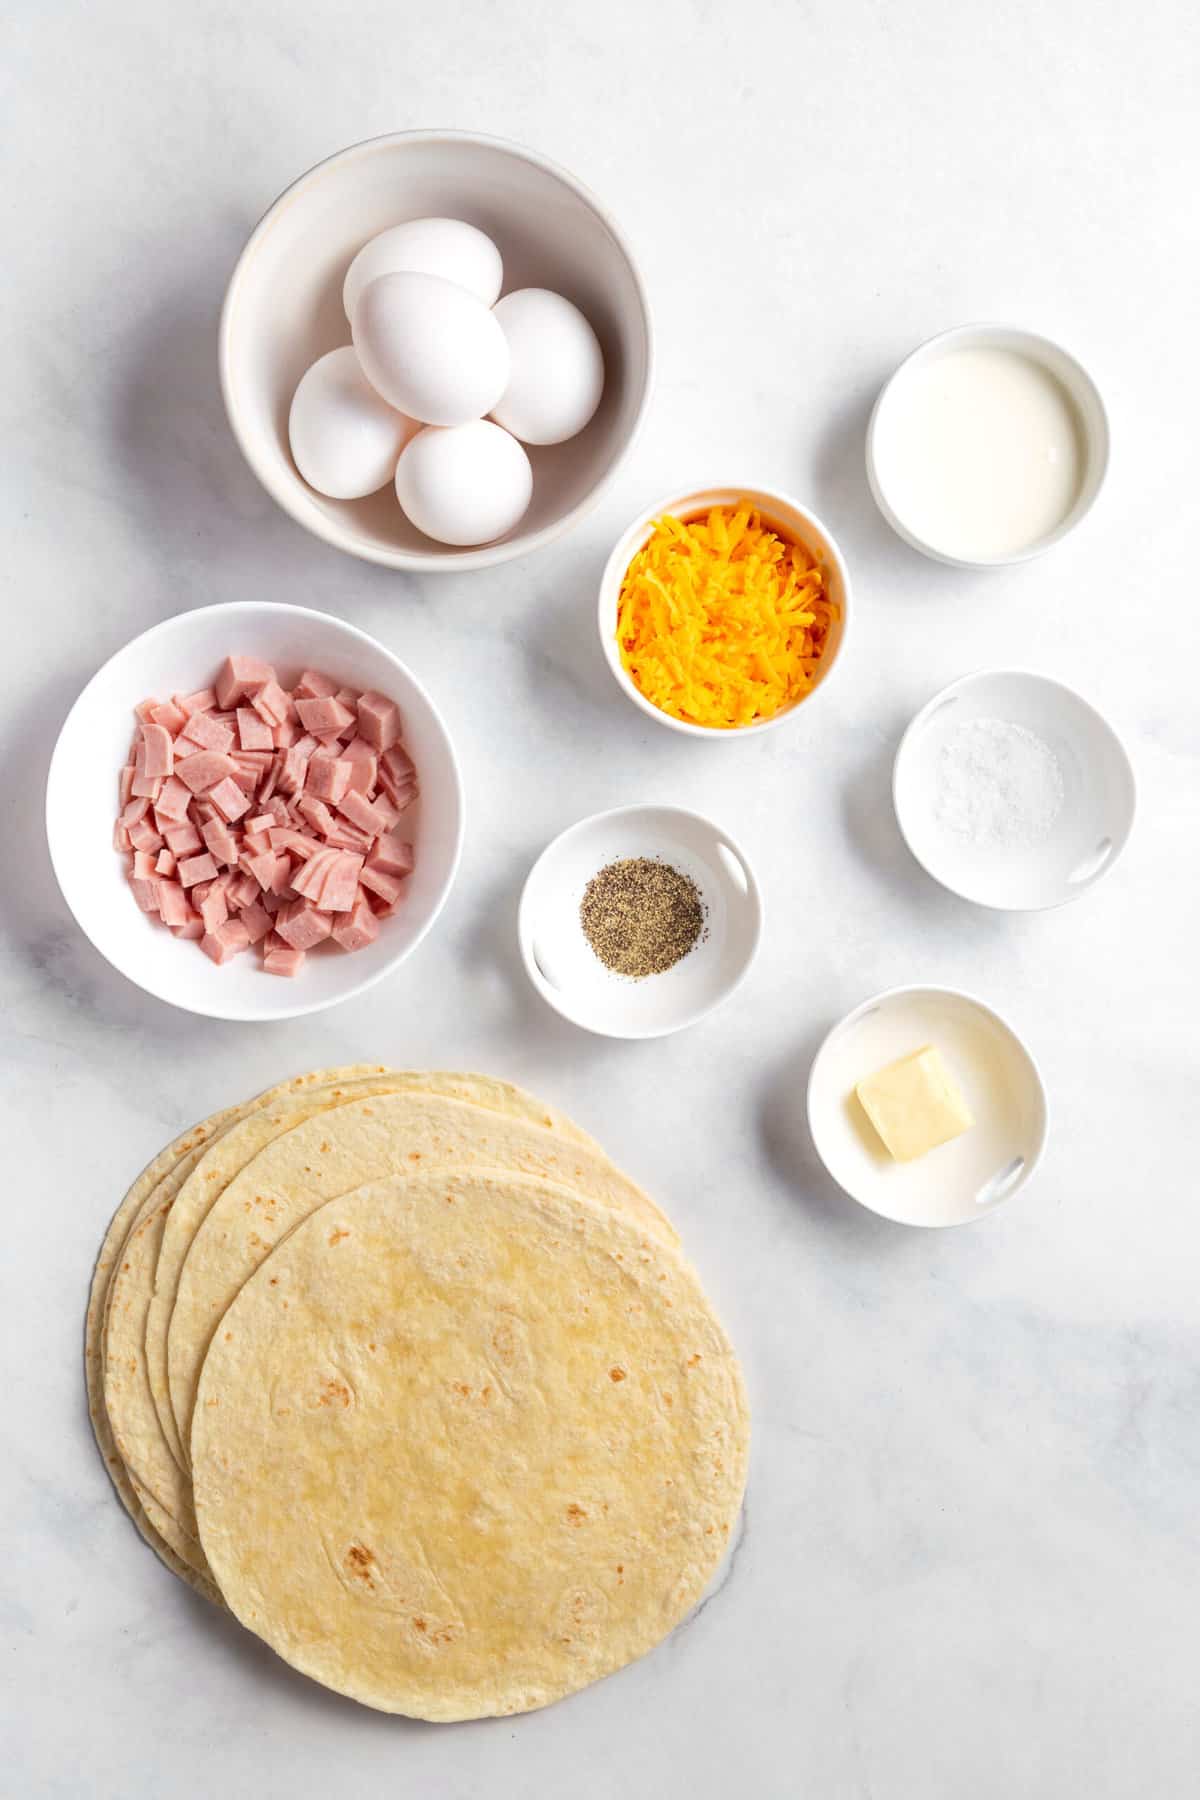 ingredients to make ham and cheese burritos.